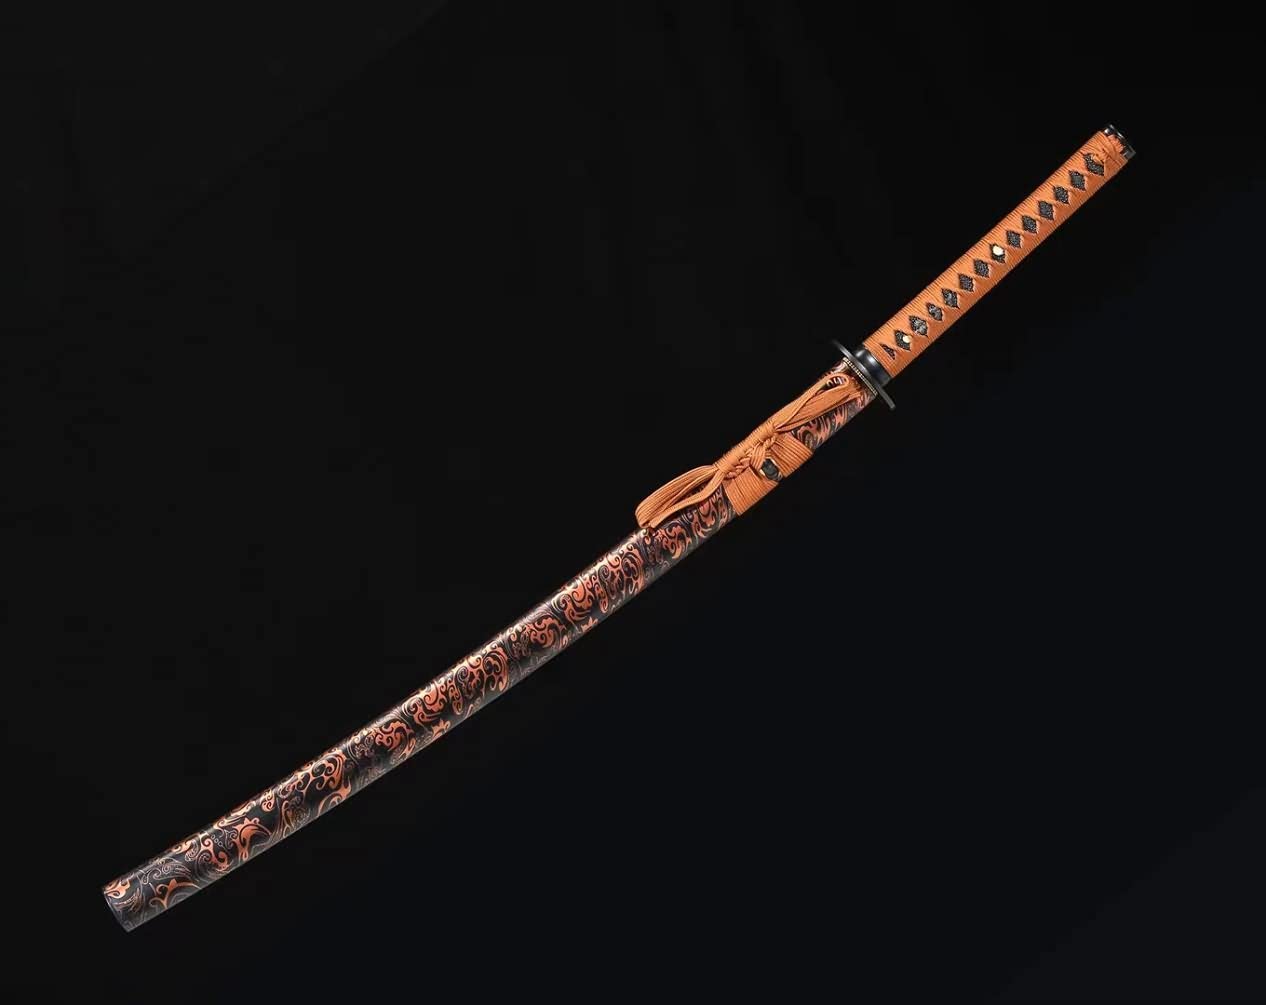 Samurai Sword Real Katana Forged T10 Steel Blade Full Tang Kirsite Fittings Kendo